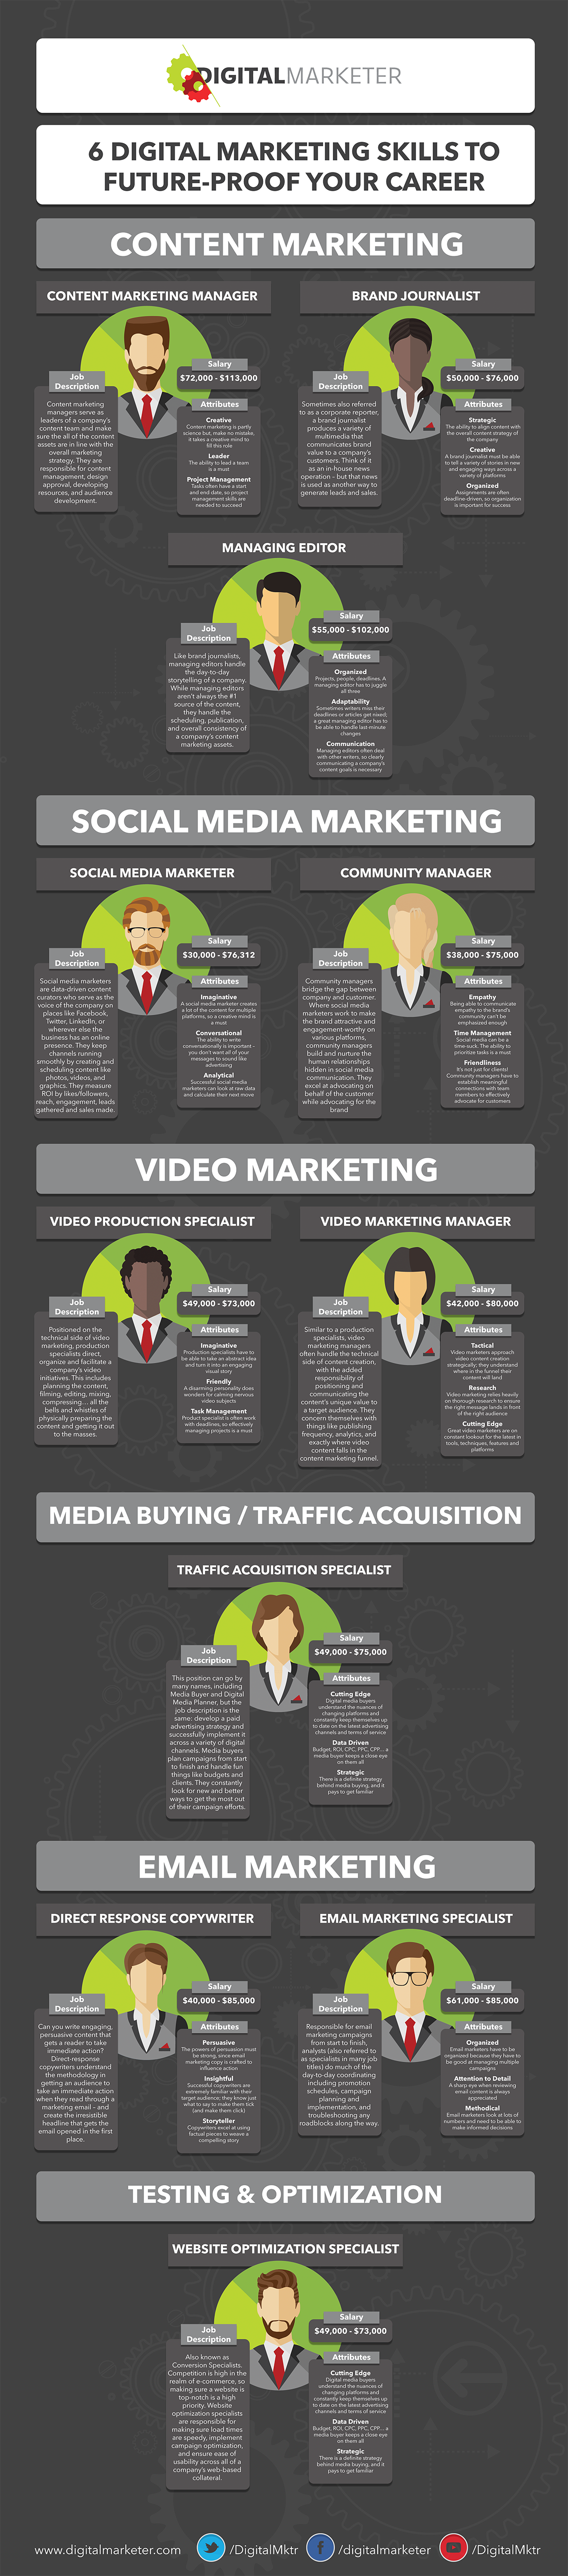 Digital marketing Skills Infographic by DigitalMarketer